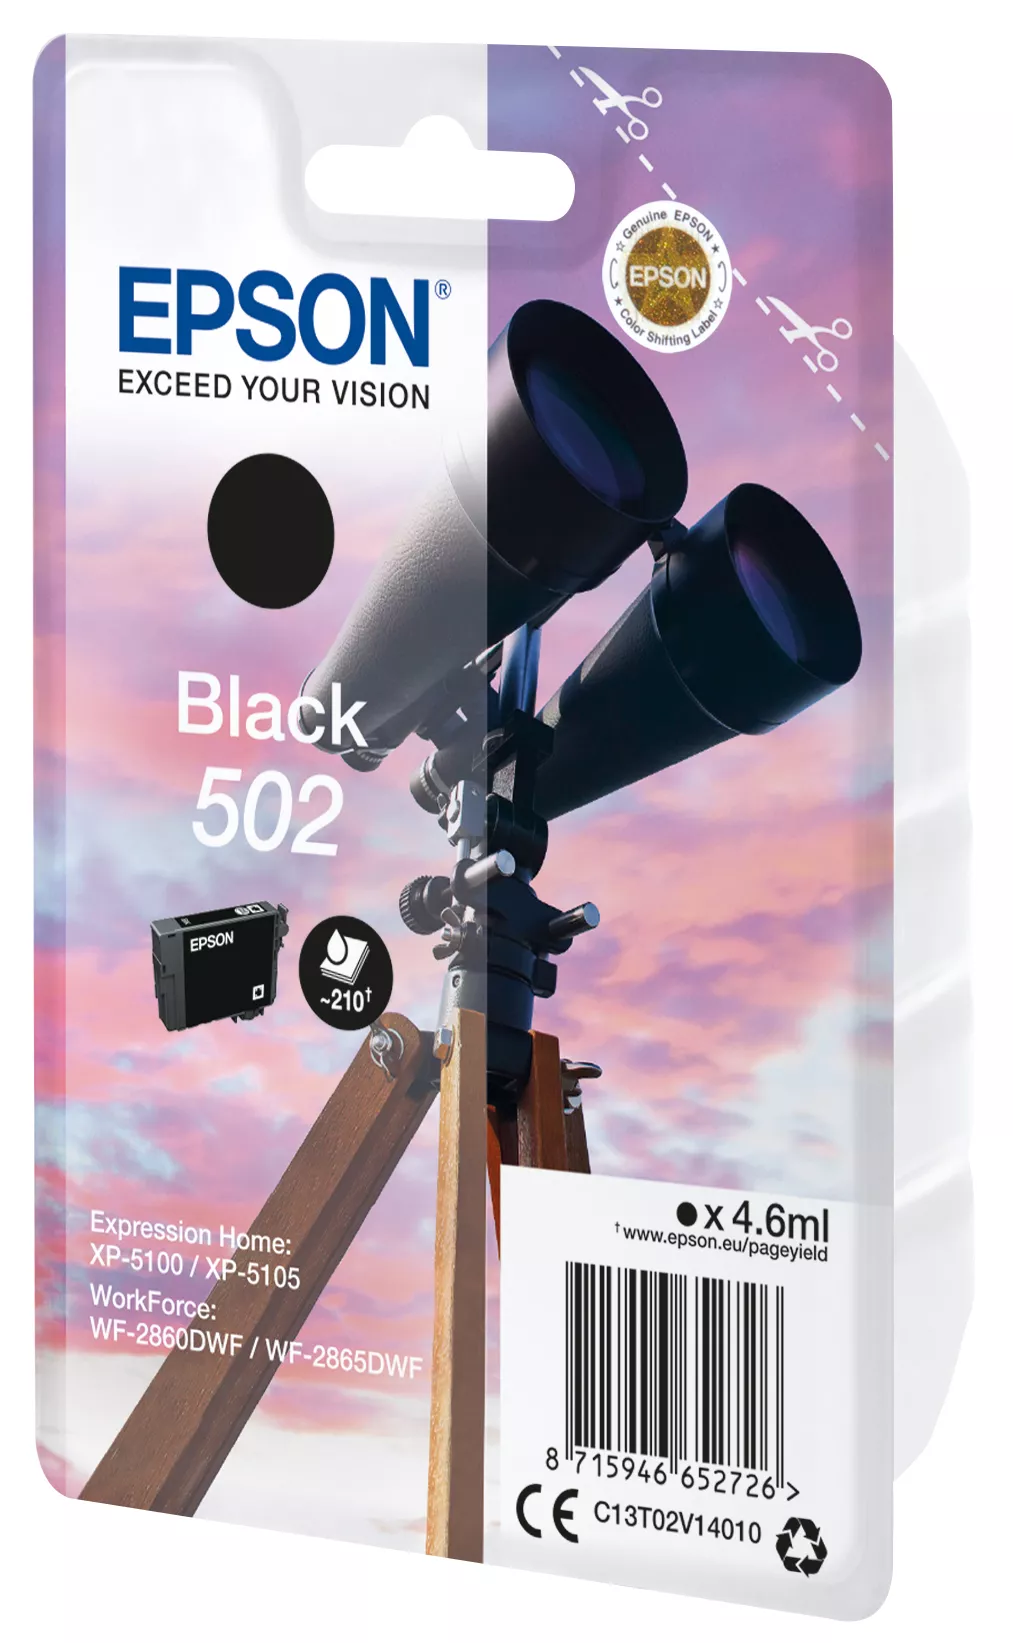 Vente EPSON Singlepack Black 502 Ink Epson au meilleur prix - visuel 2